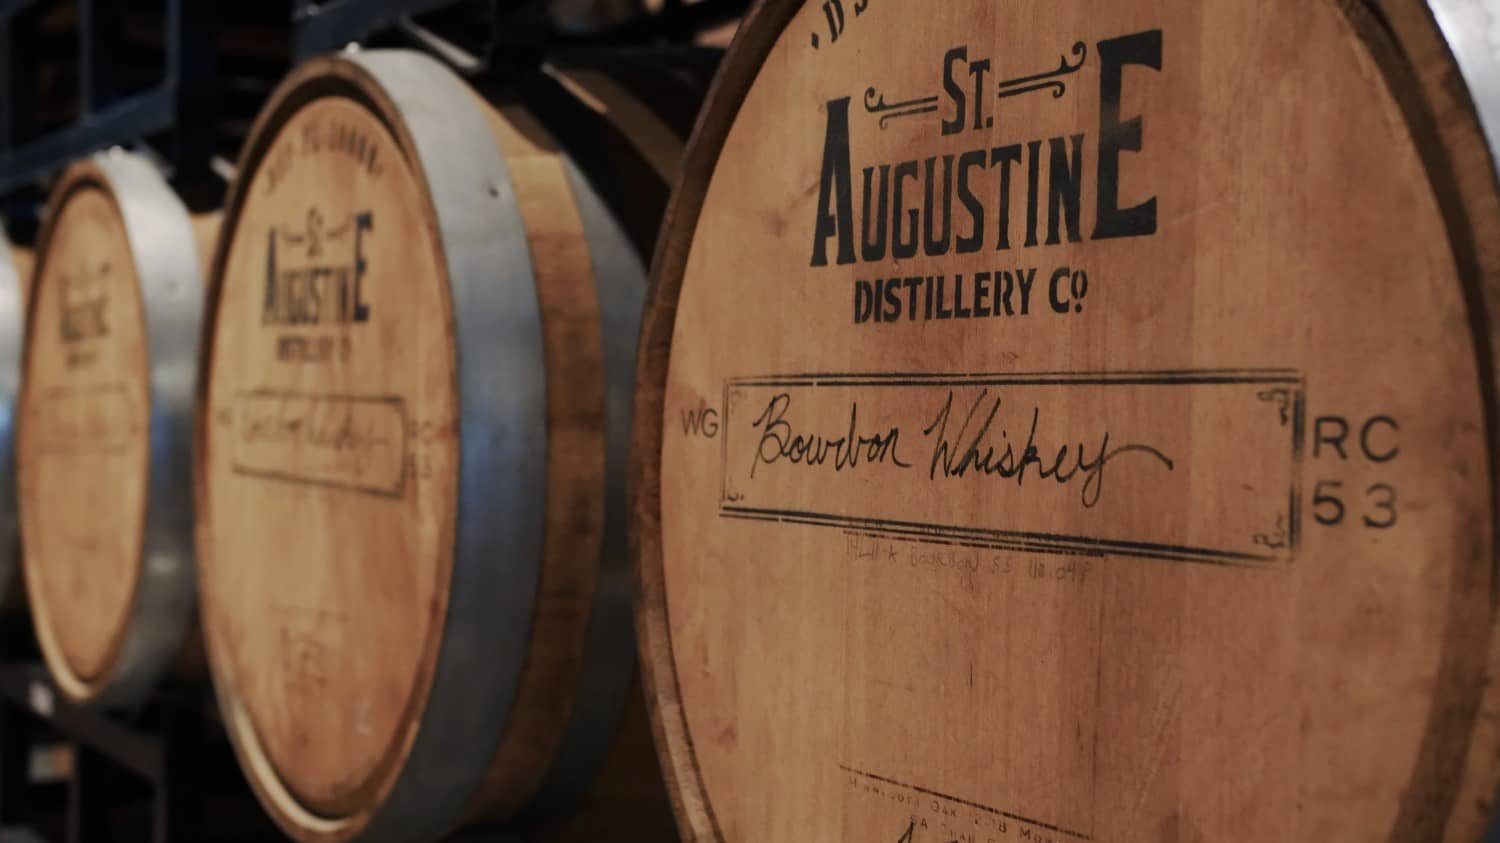 Barrels of Small batch bourbon from Augustine Distillery